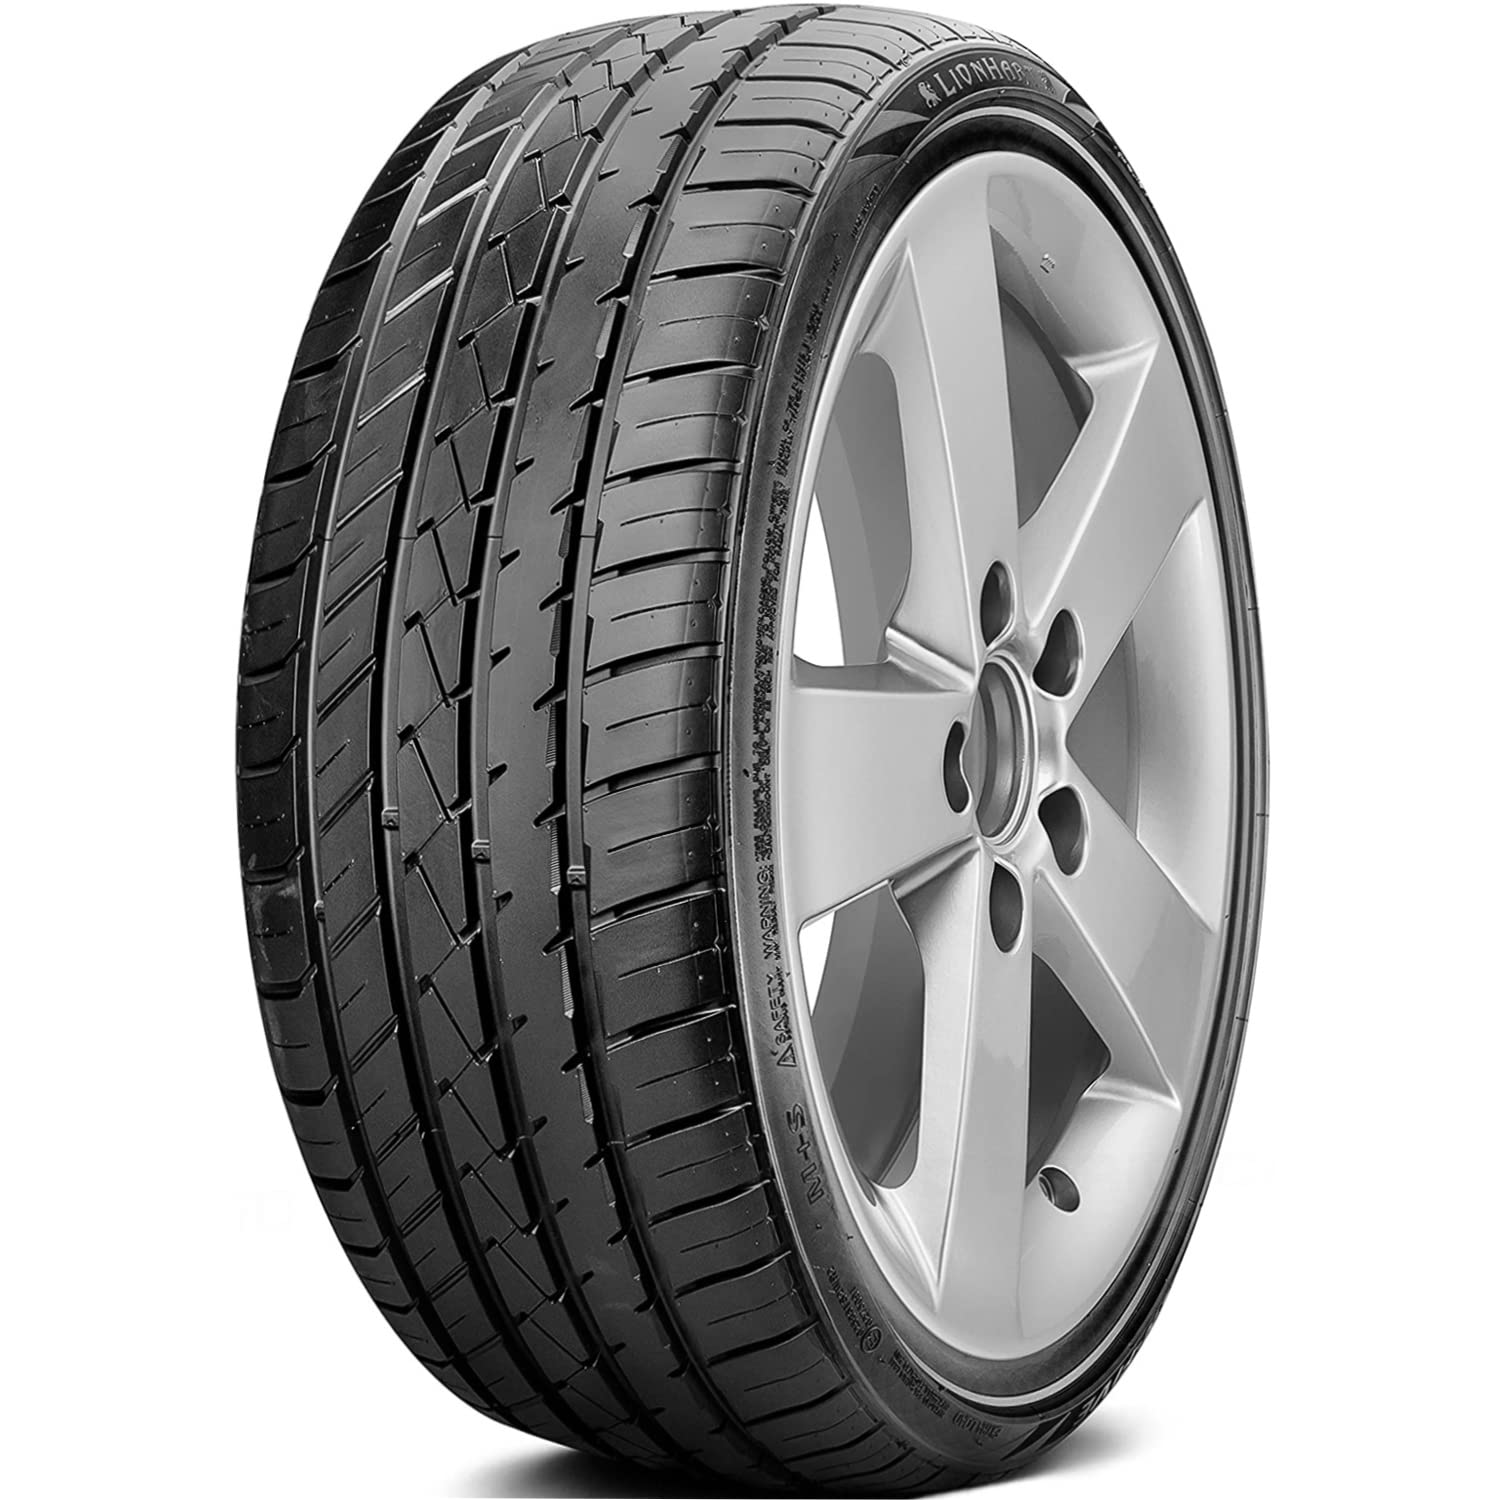 LIONHART LH-FIVE 305/35ZR22 (30.4X12R 22) Tires